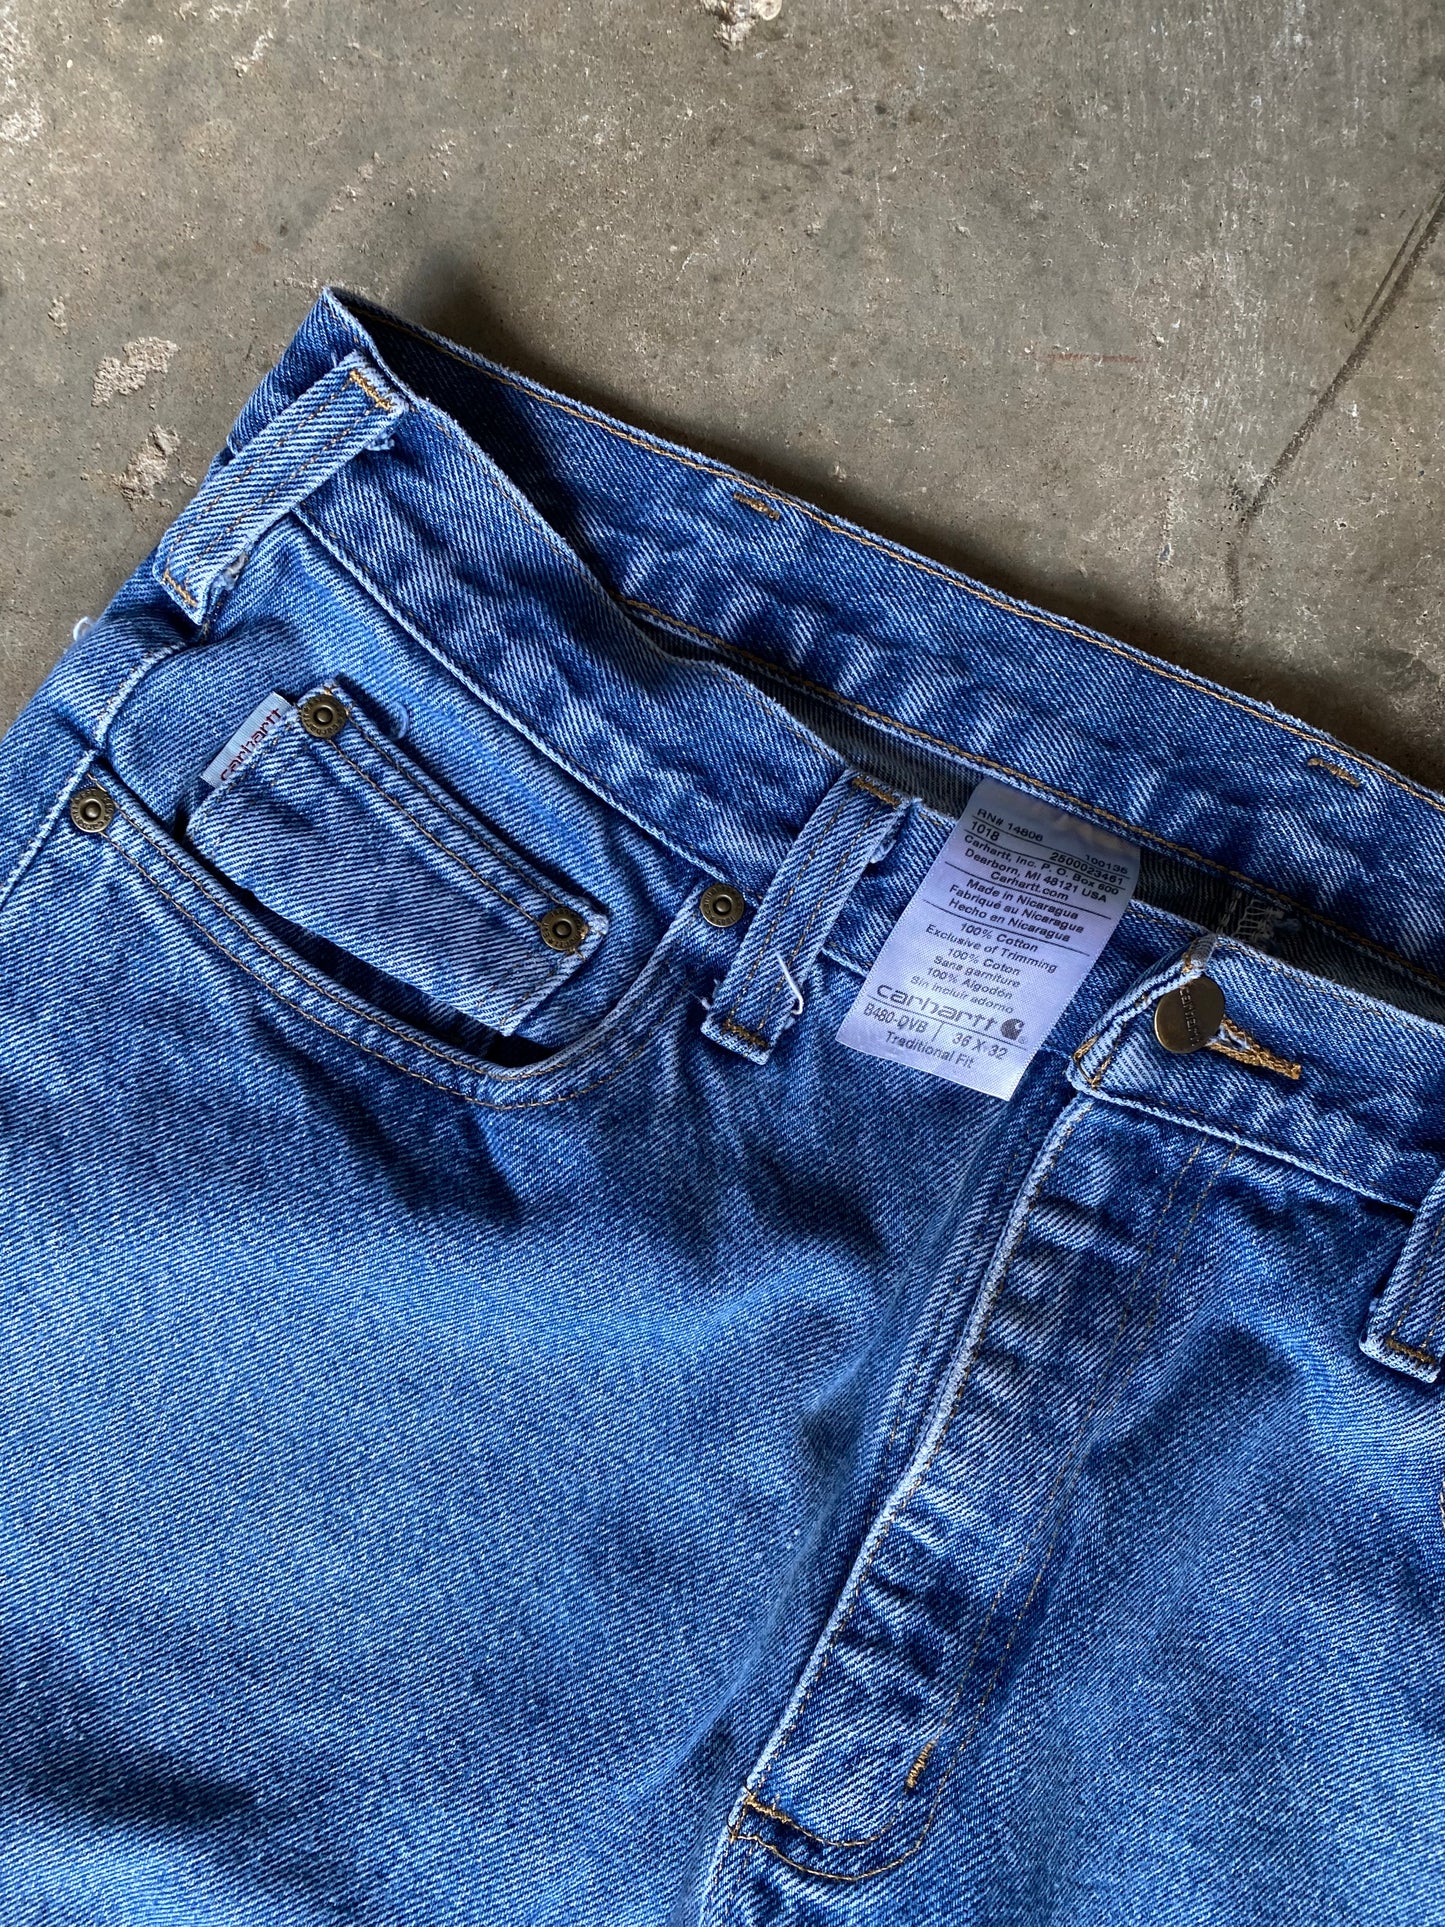 36x32 Carhartt Jeans